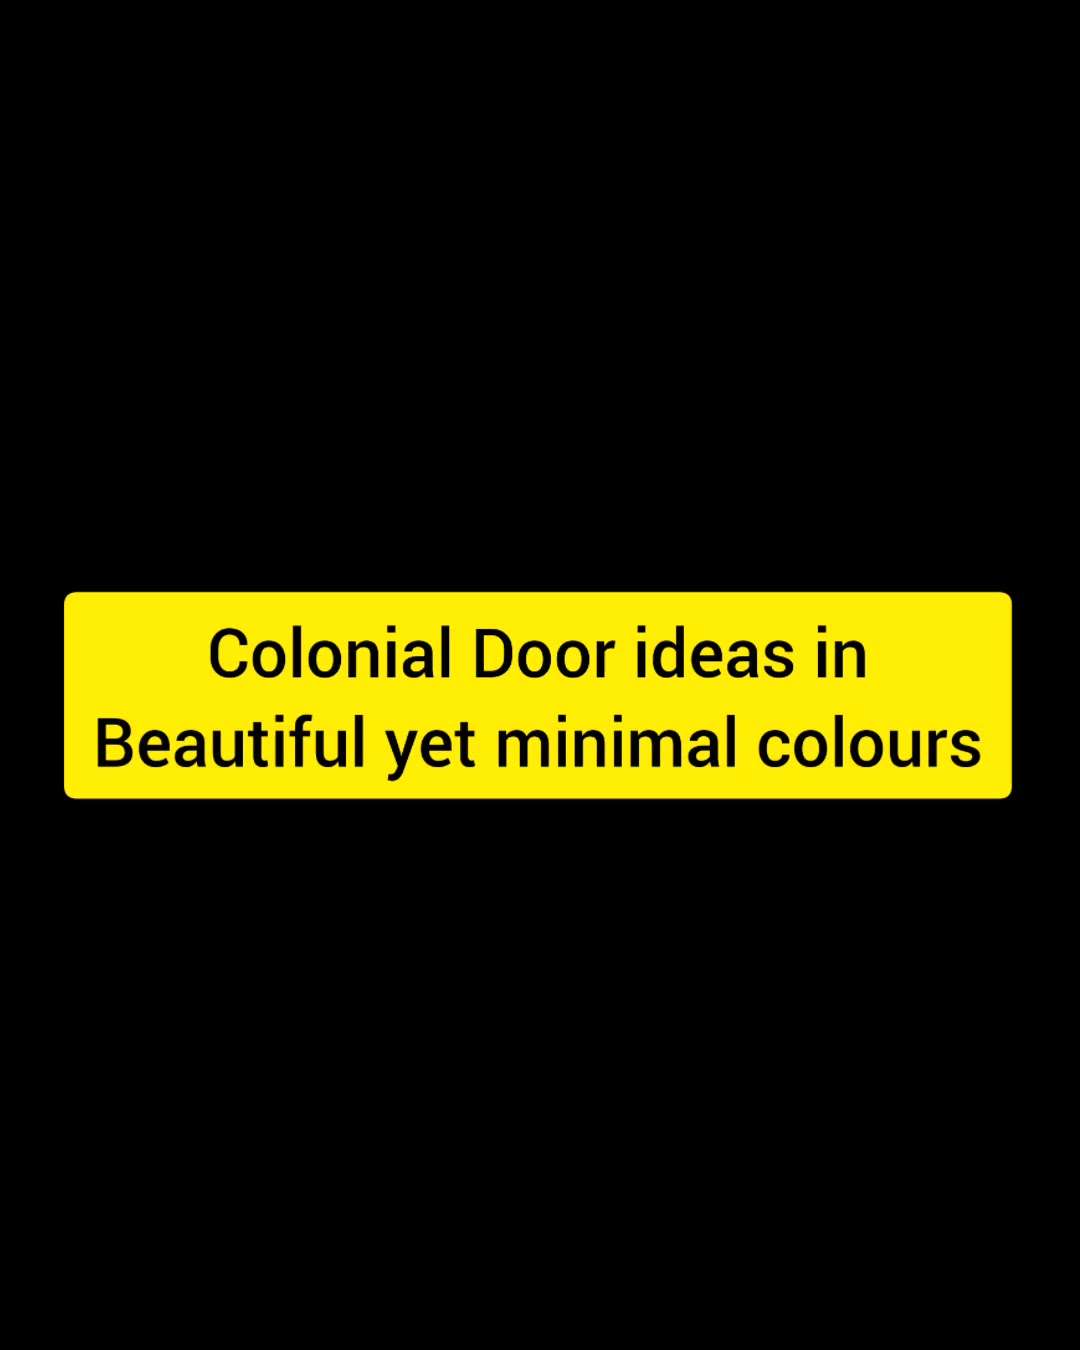 #creatorsofkolo #doors #buy #rightdoors #doorideas #colonial_style #Minimalistic #minimalisticdoors
see these awesome colonial yet minimalistic door designs for your home